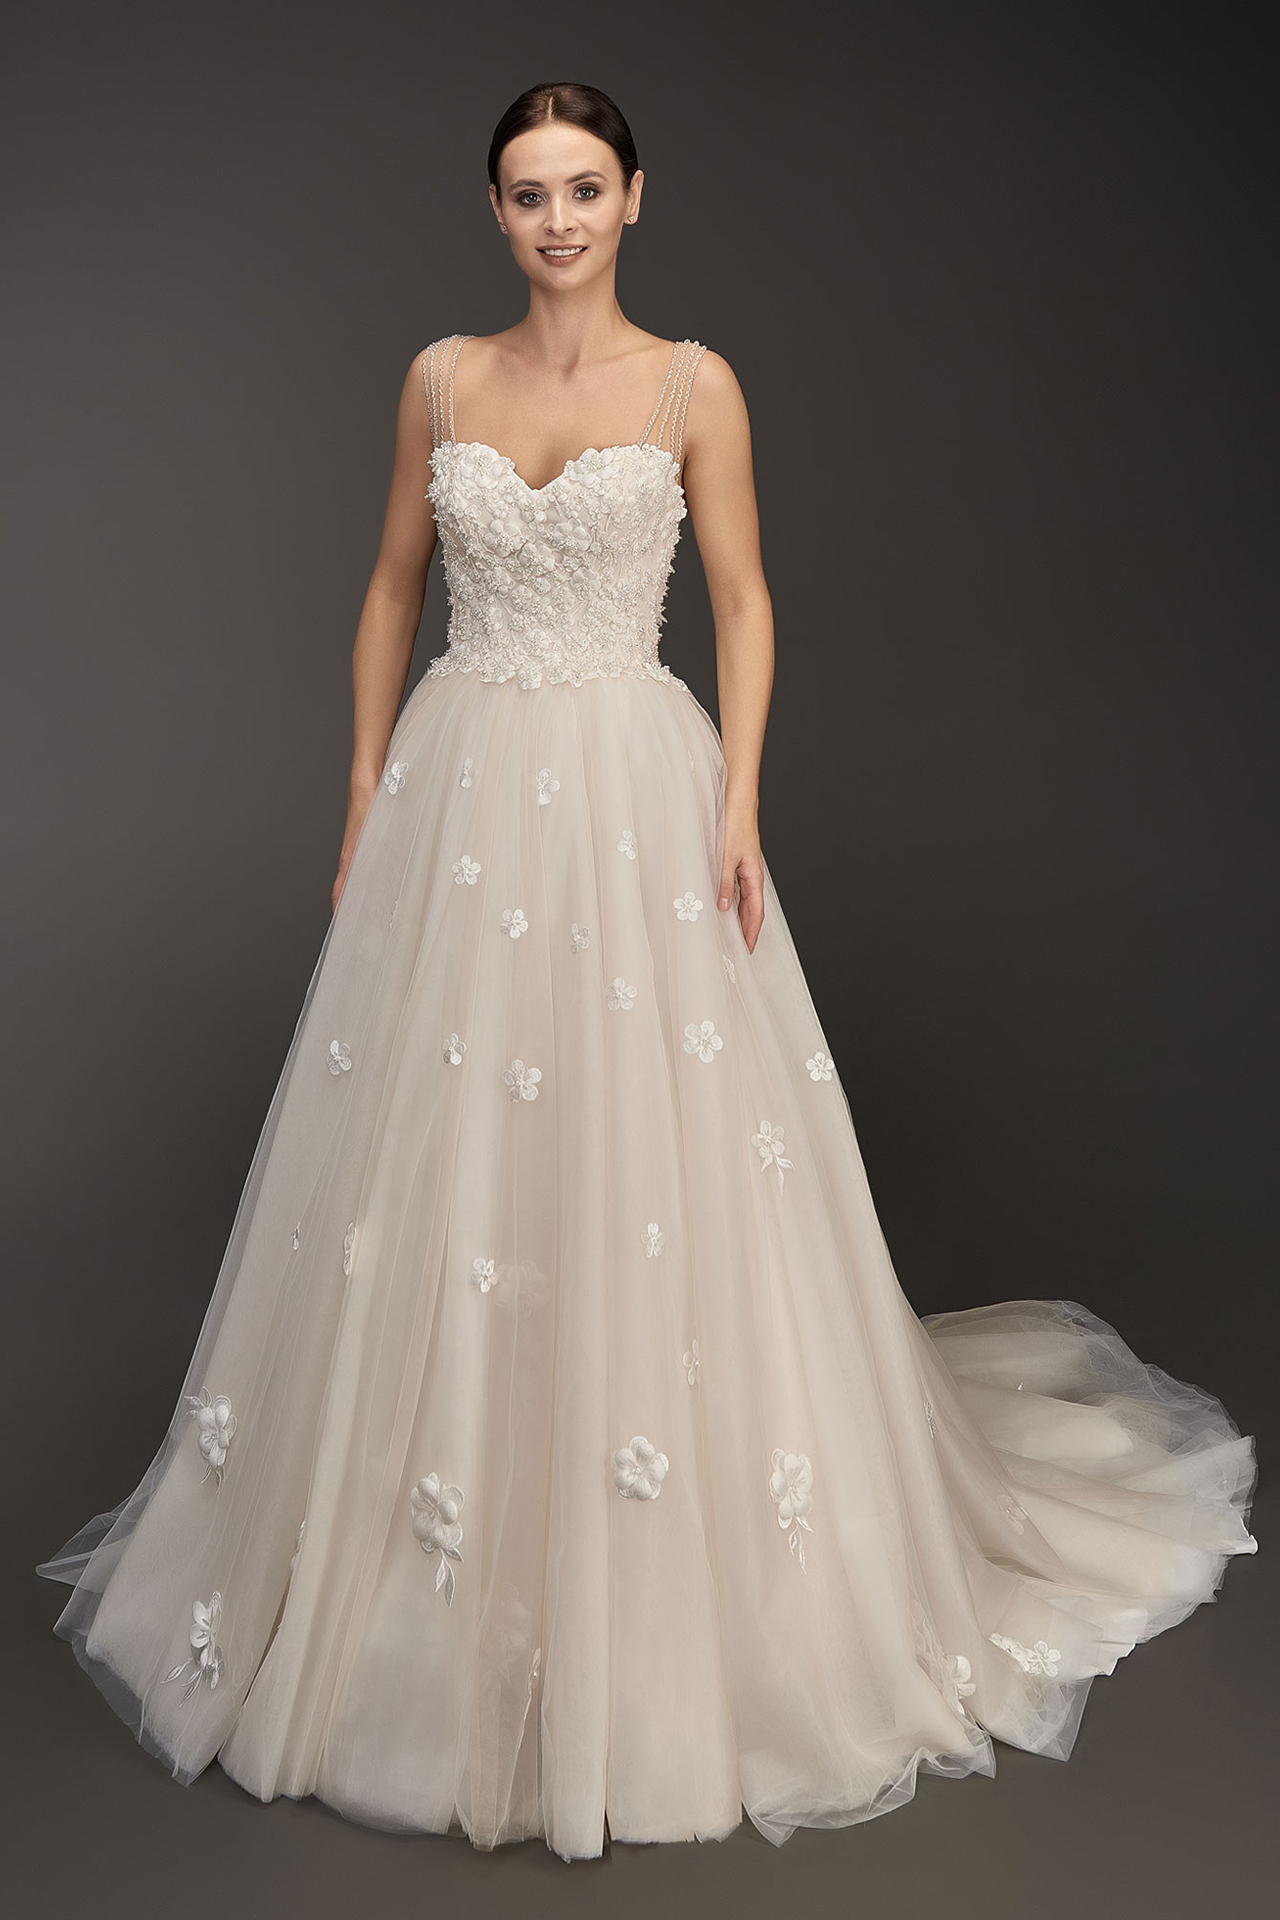 Princess wedding dress, Boho style engagement dress, Blush tulle bridal gown, Sparkly evening dress, Beautiful prom dress, Victoria